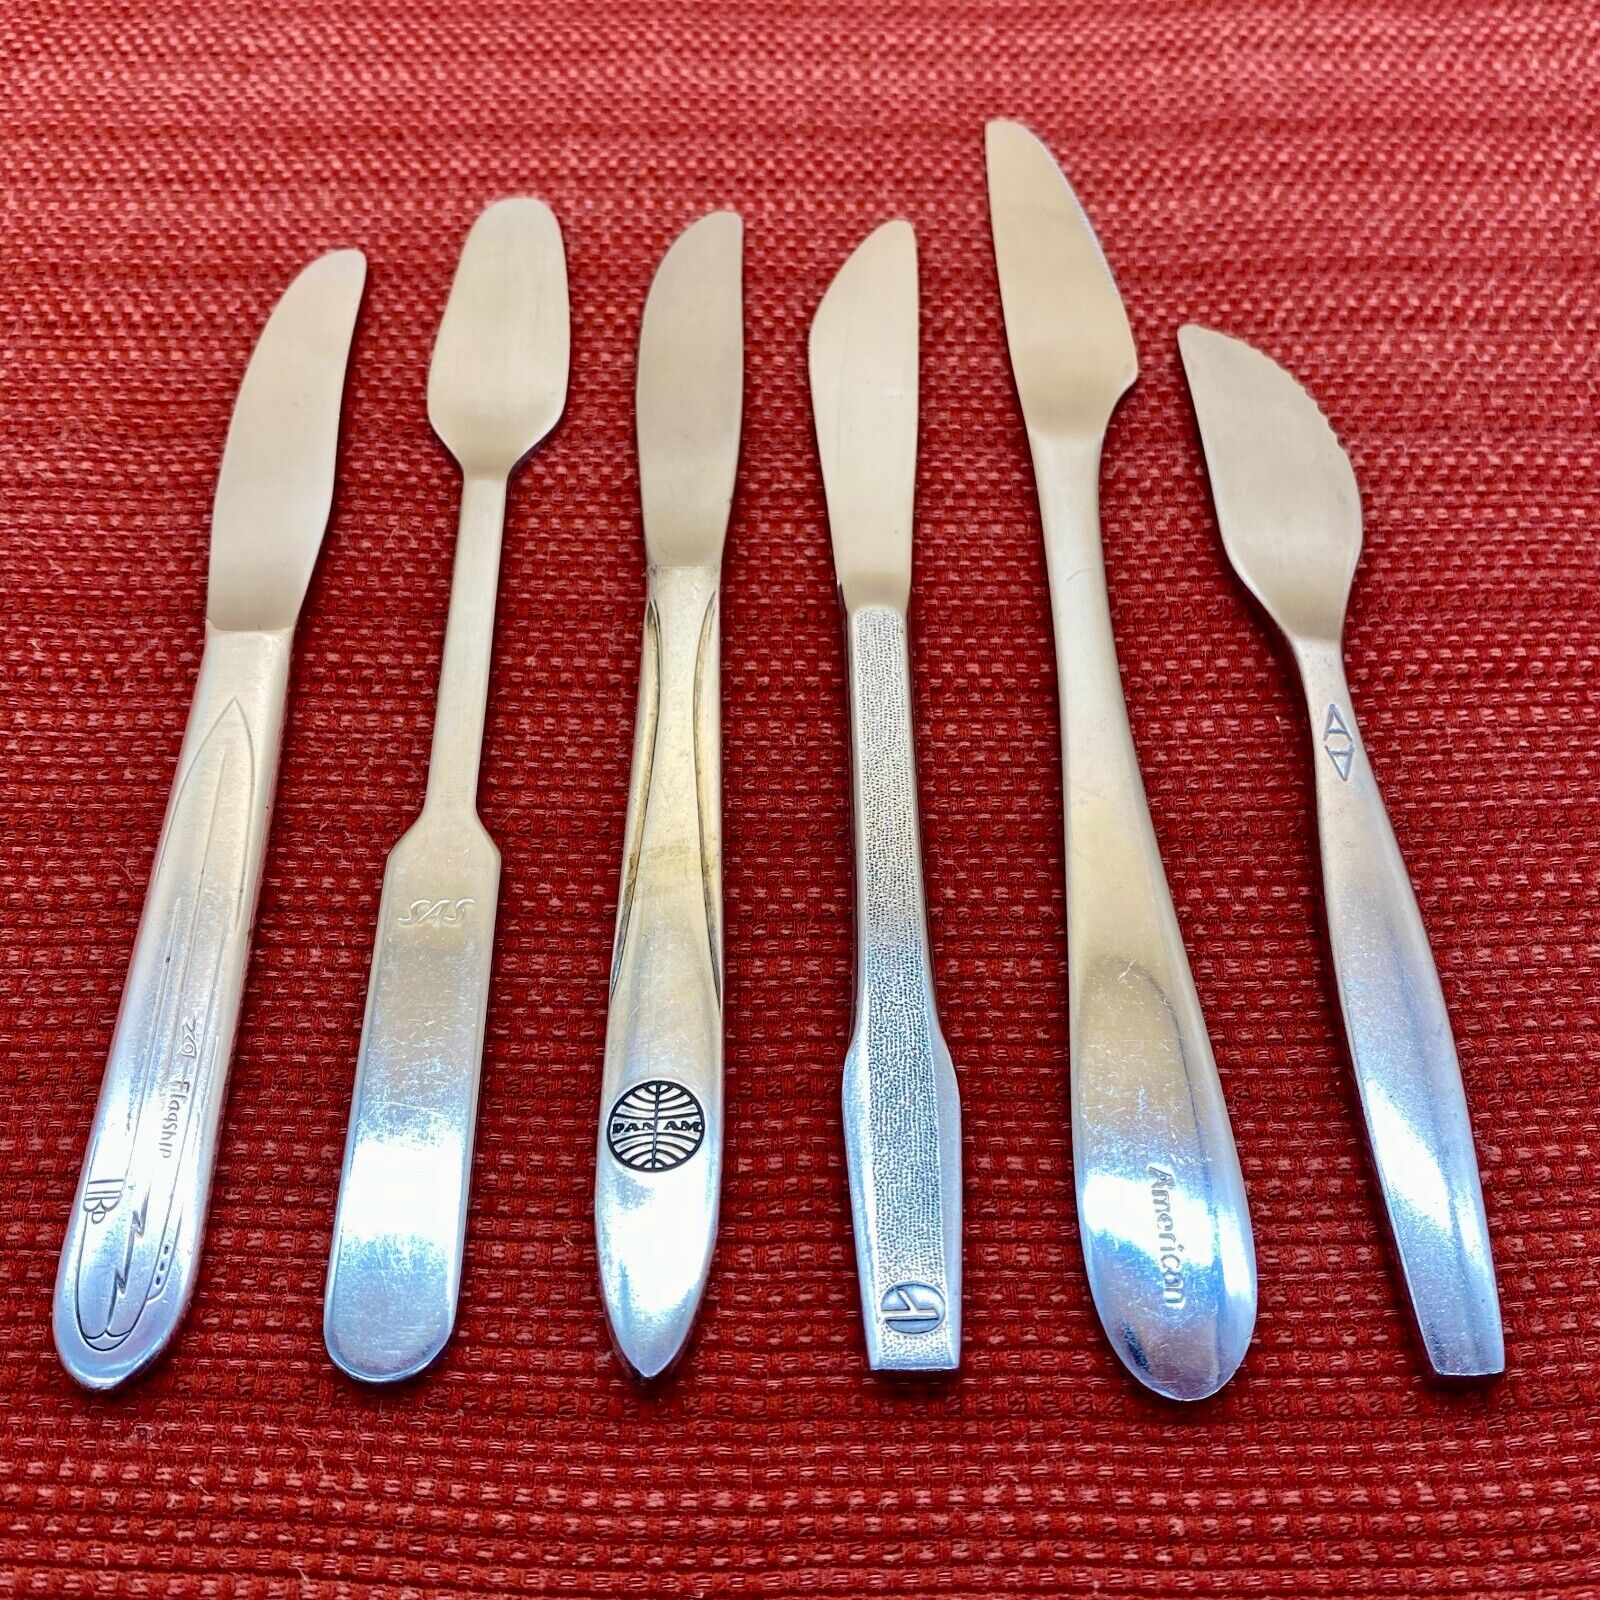 Lot of 7 Vintage AIRLINES Knives Flatware Cutlery PAN-AM, AMERICAN, EASTERN, SAS